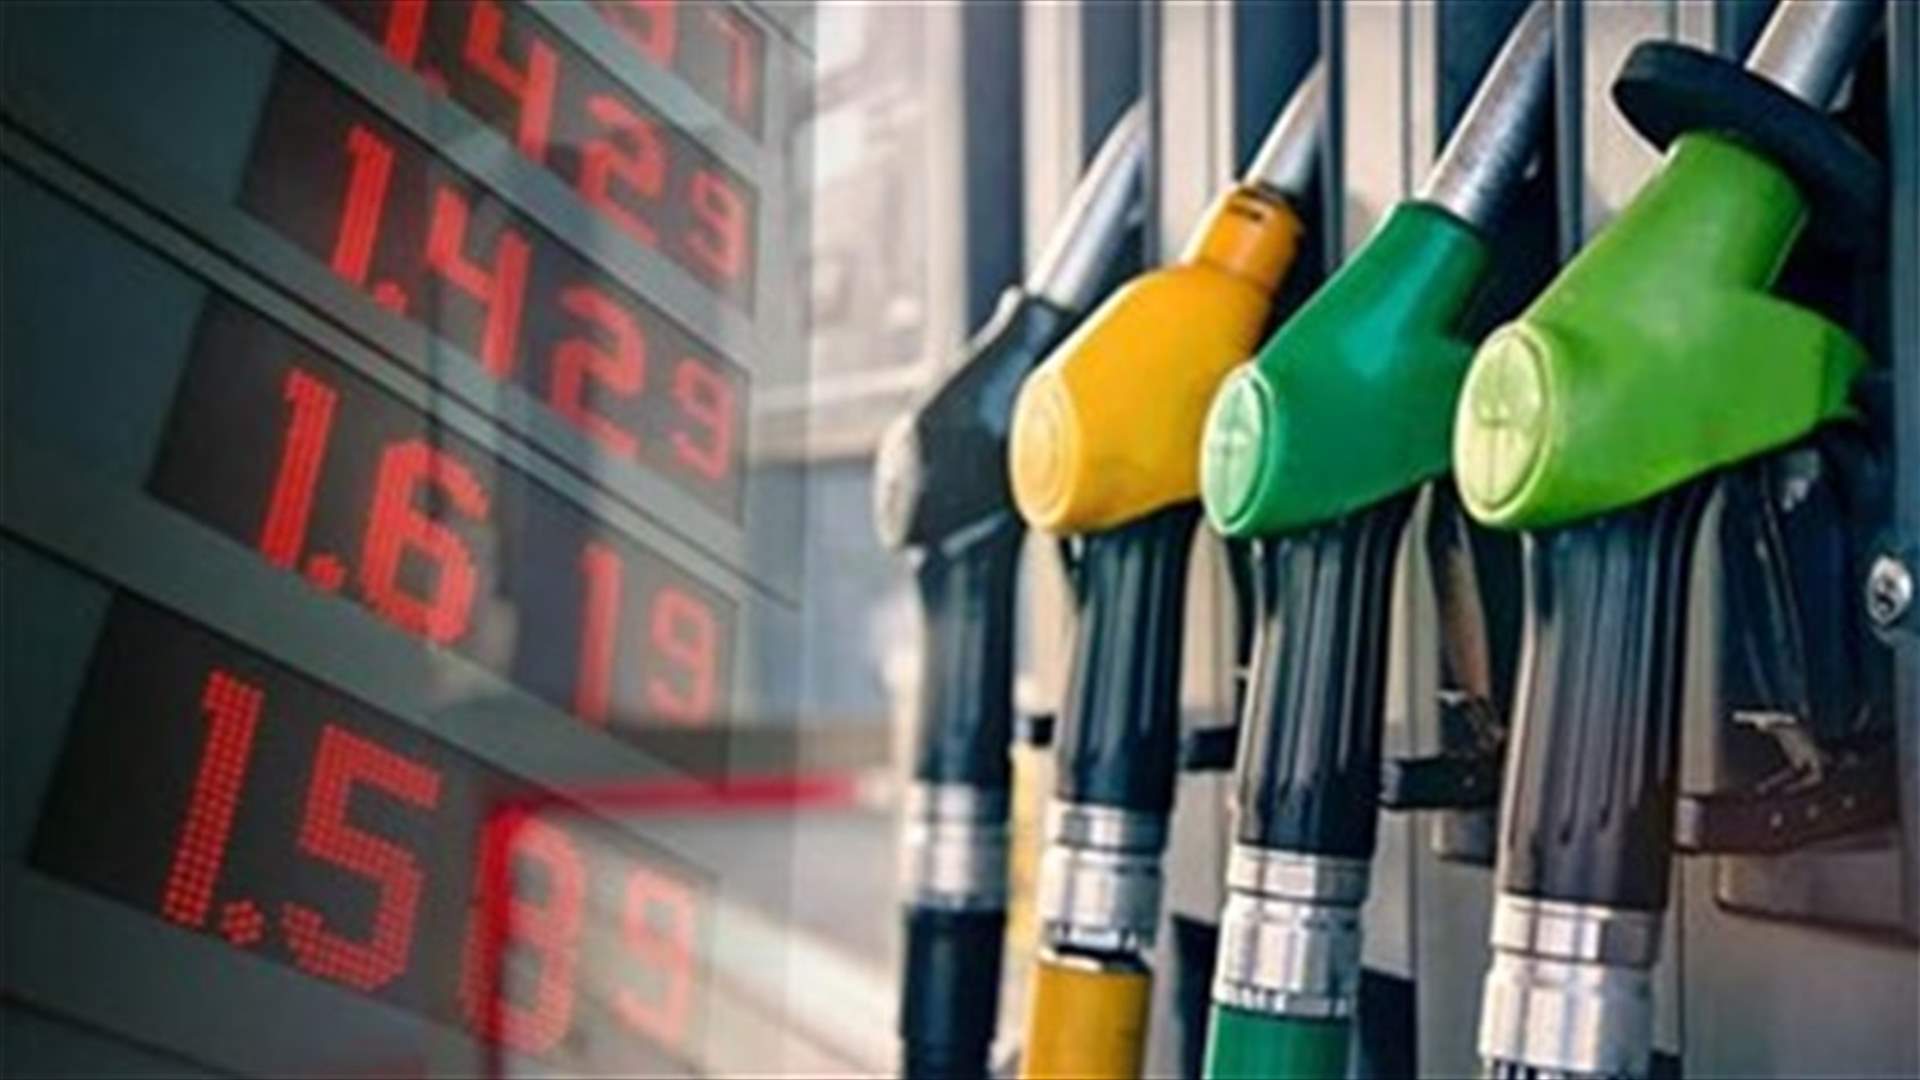 Price of 95 octane fuel drops 1400 LBP